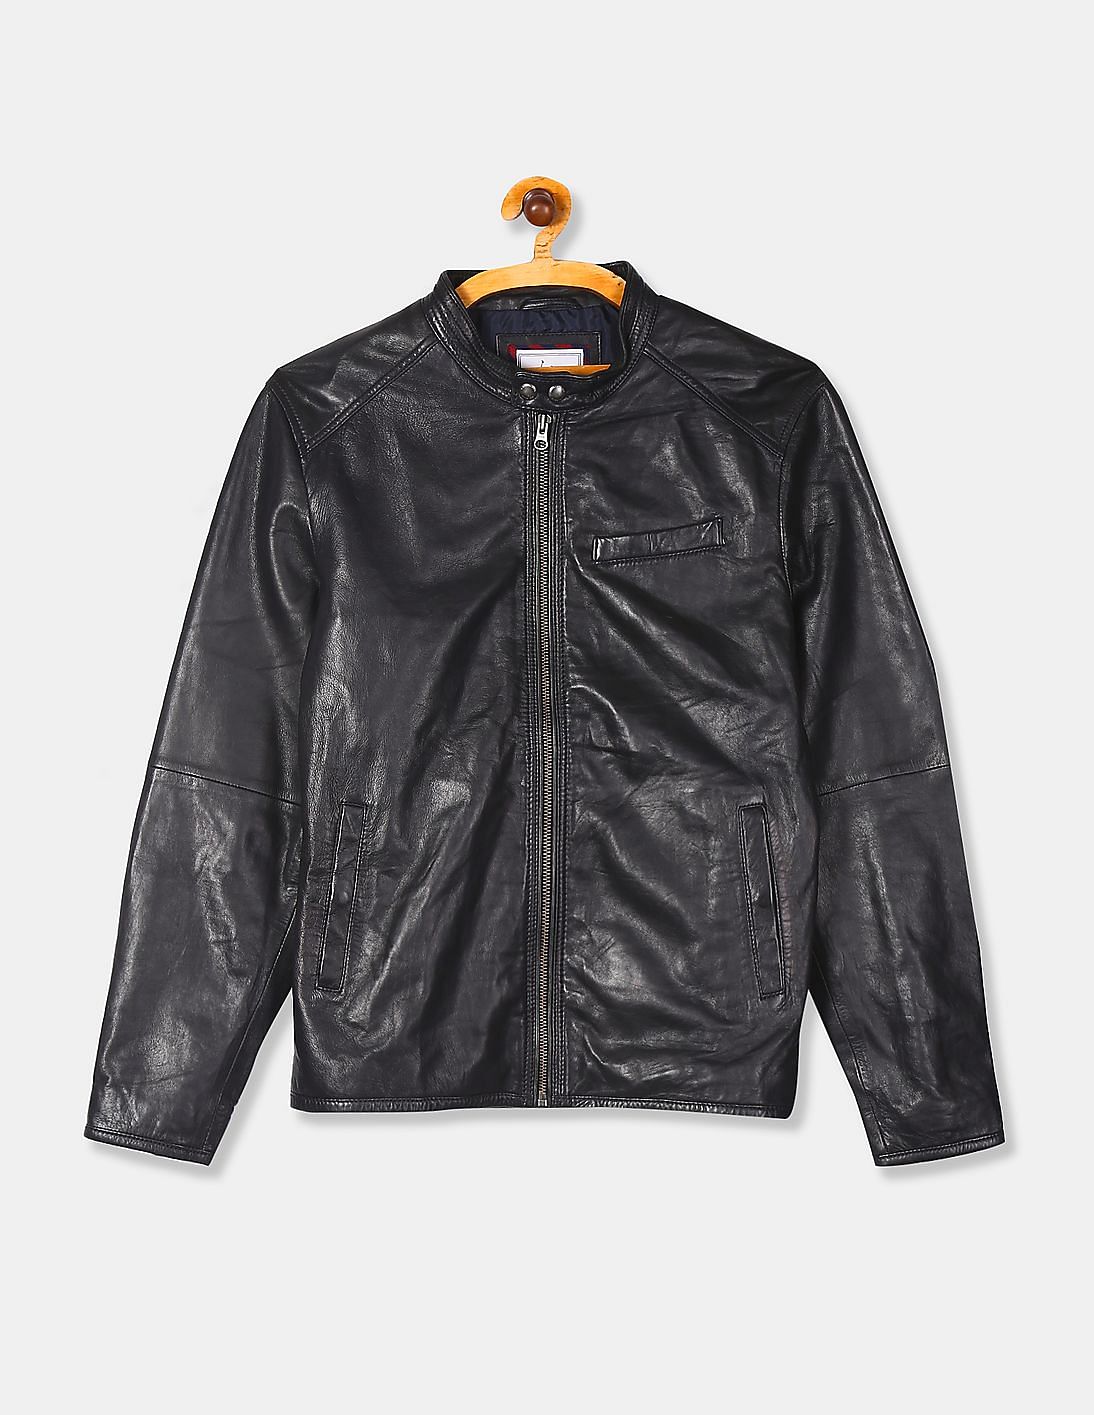 leather jacket online shopping